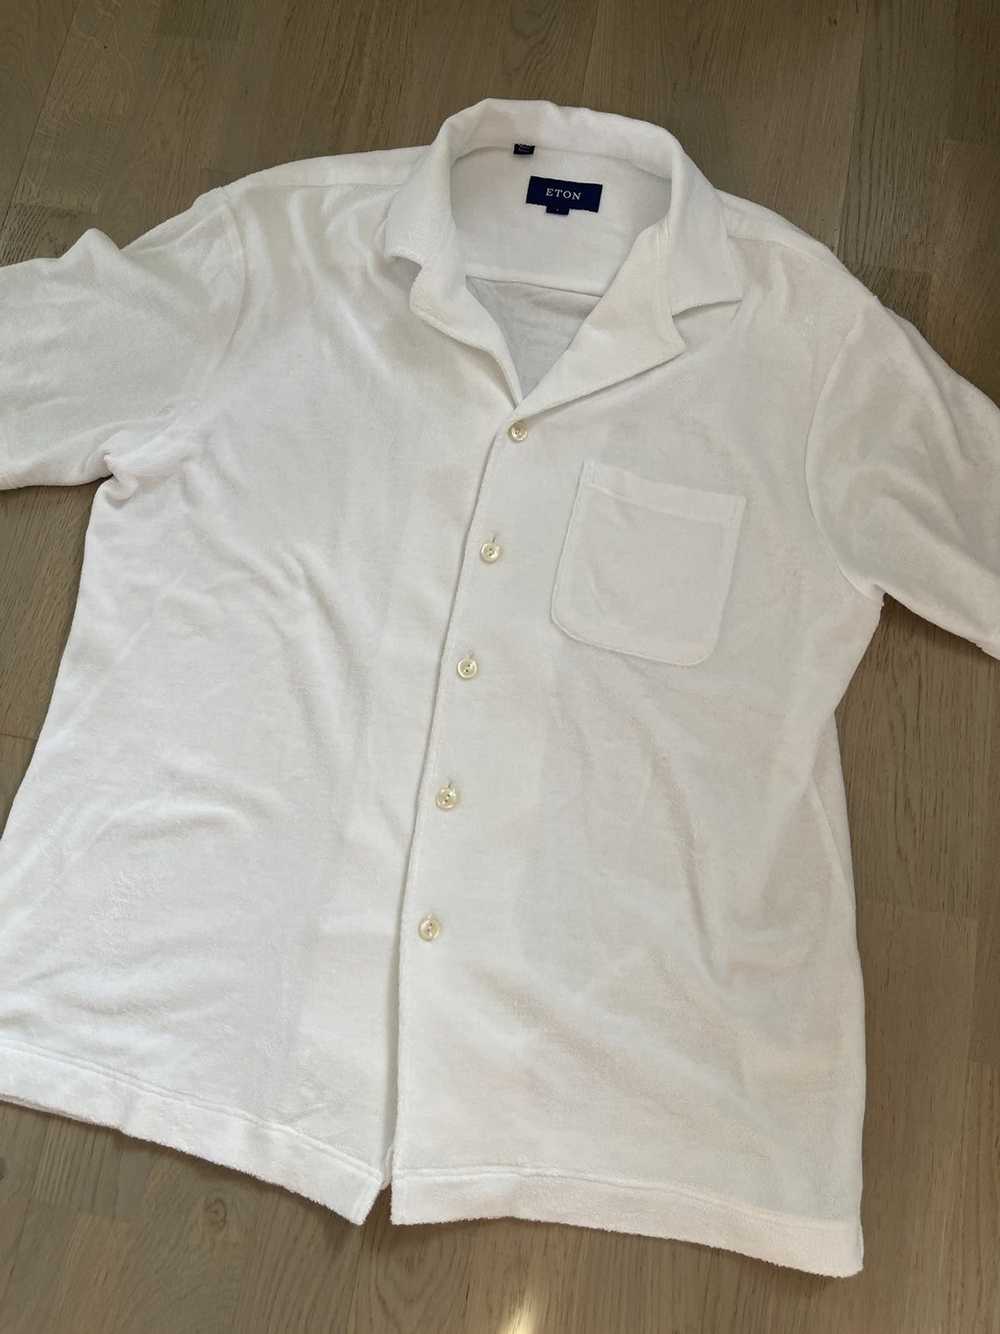 Eton ETON shirt real sizes in photos by tape meas… - image 1